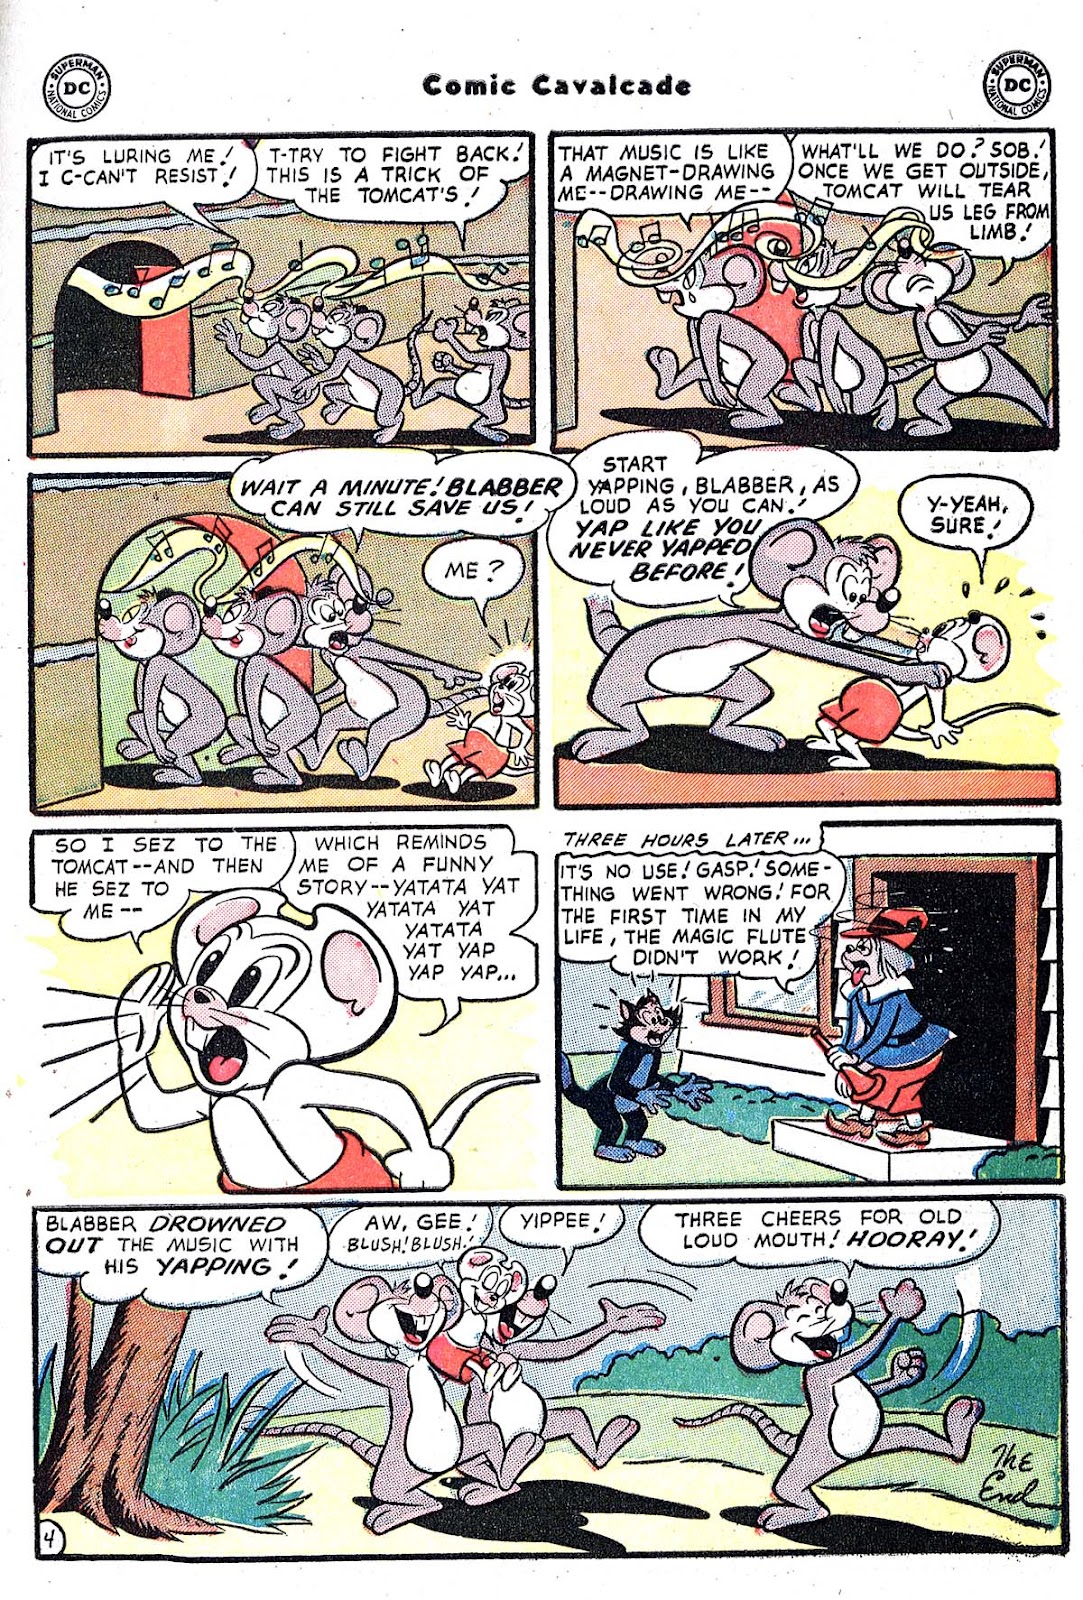 Comic Cavalcade issue 58 - Page 59